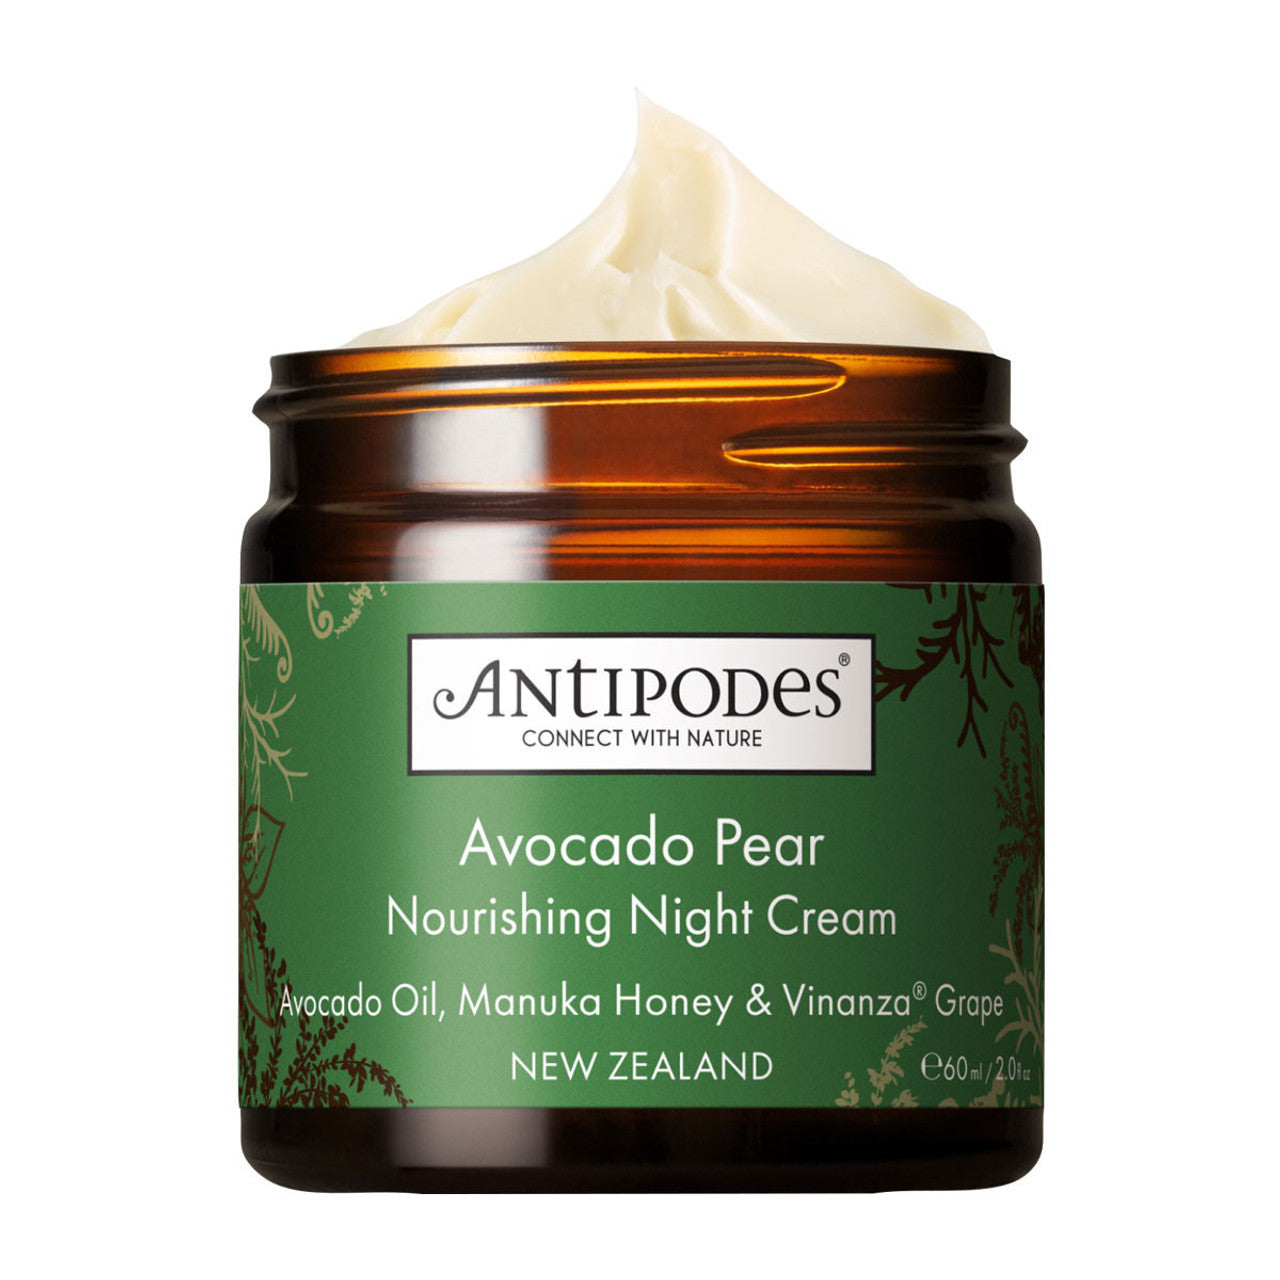 Antipodes Avocado Pear Nourishing Night Cream - 60ml